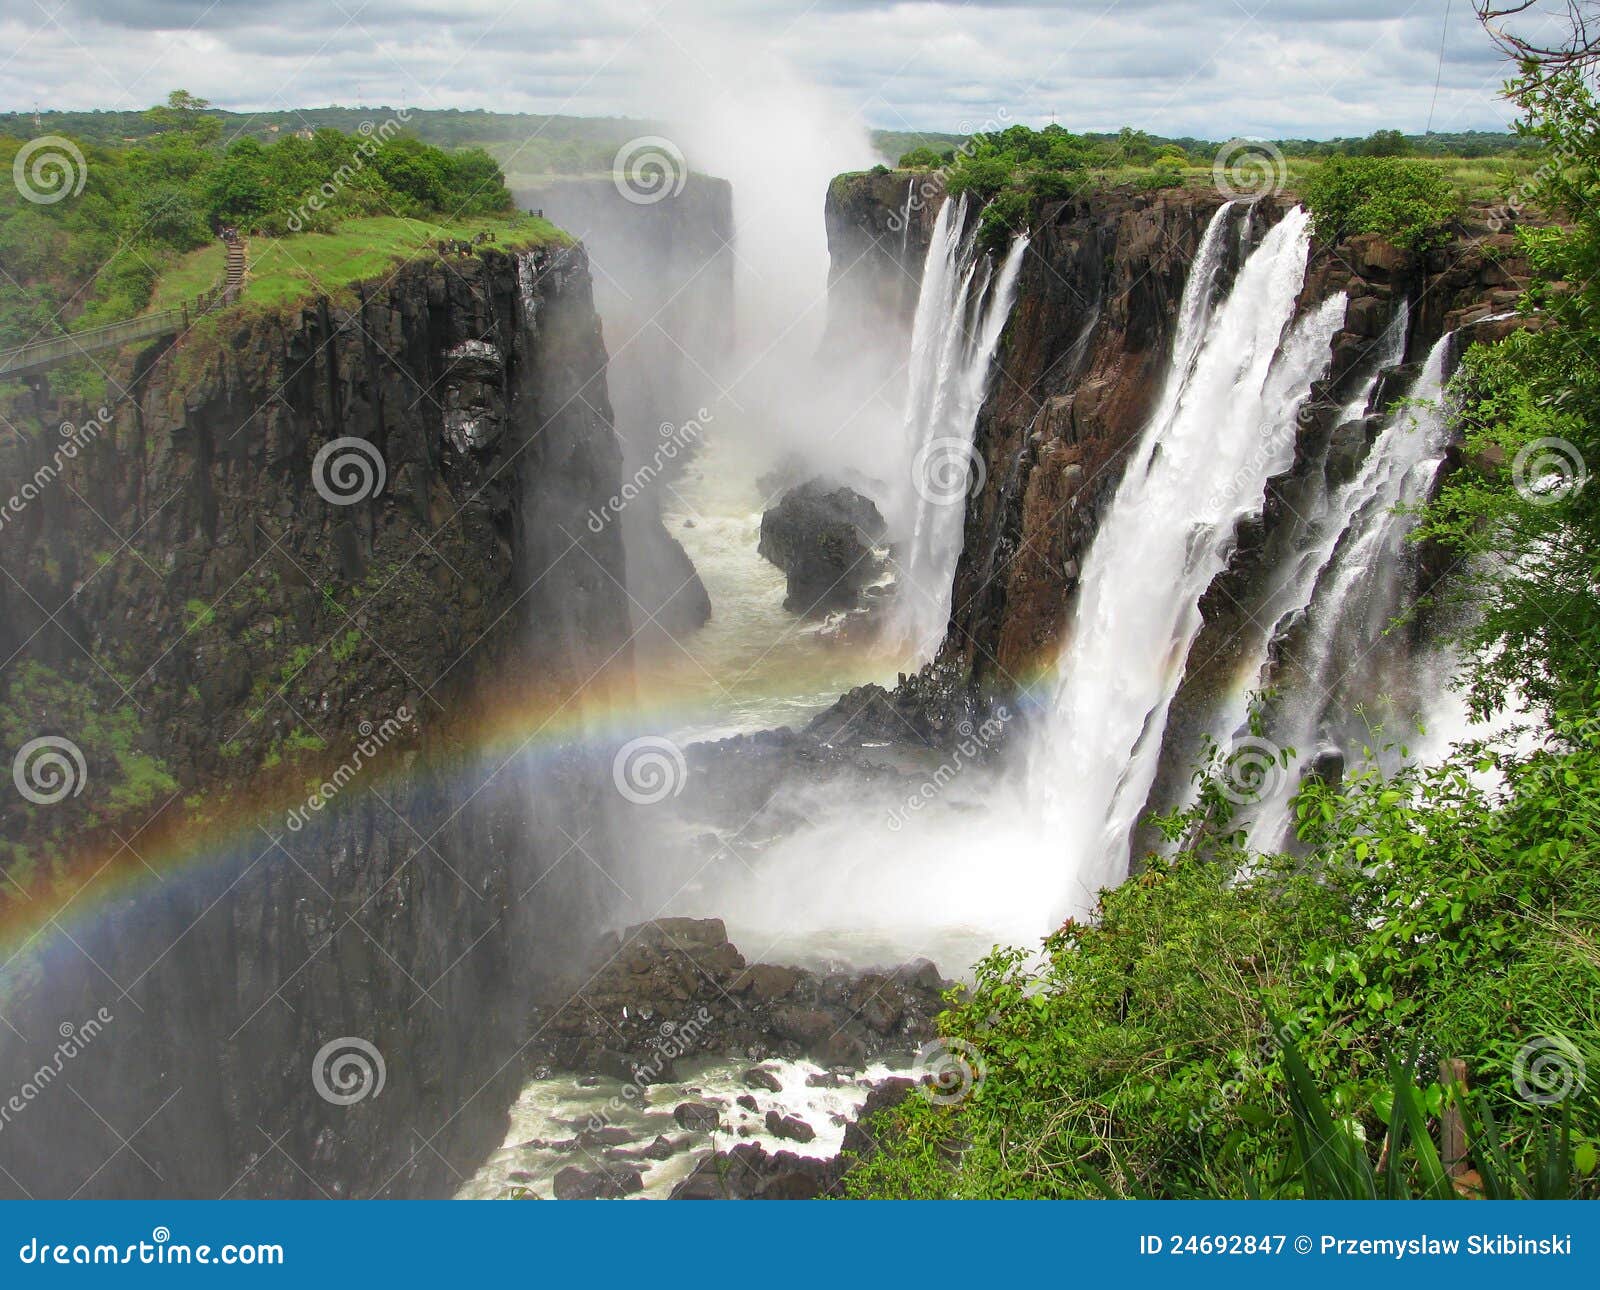 rainbow over victoria falls on zambezi river